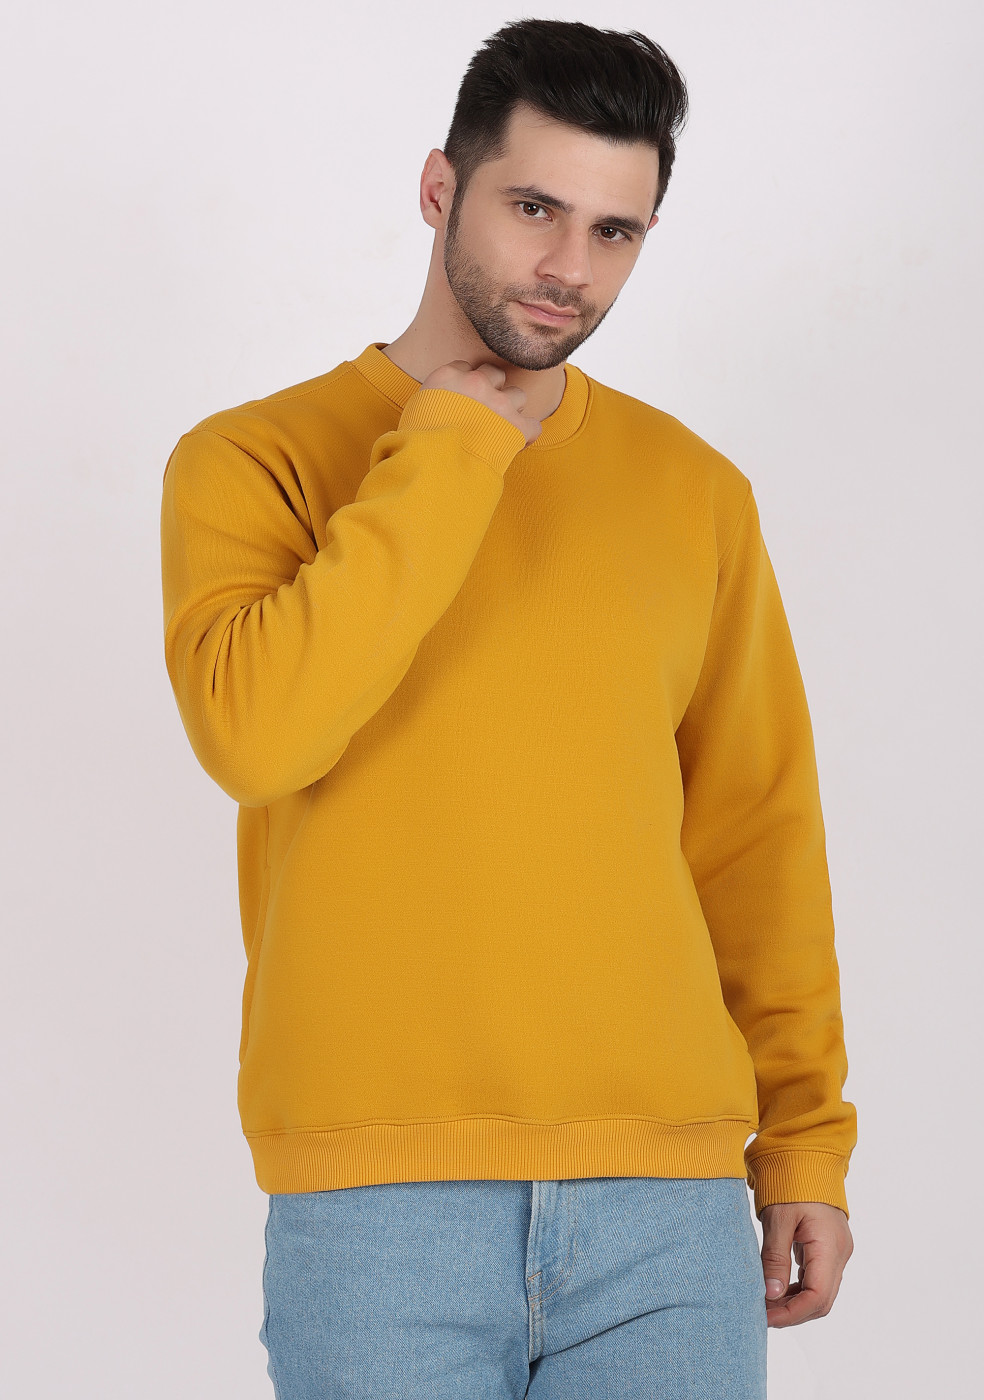 HUKH Mustard Color Sweatshirt For Men